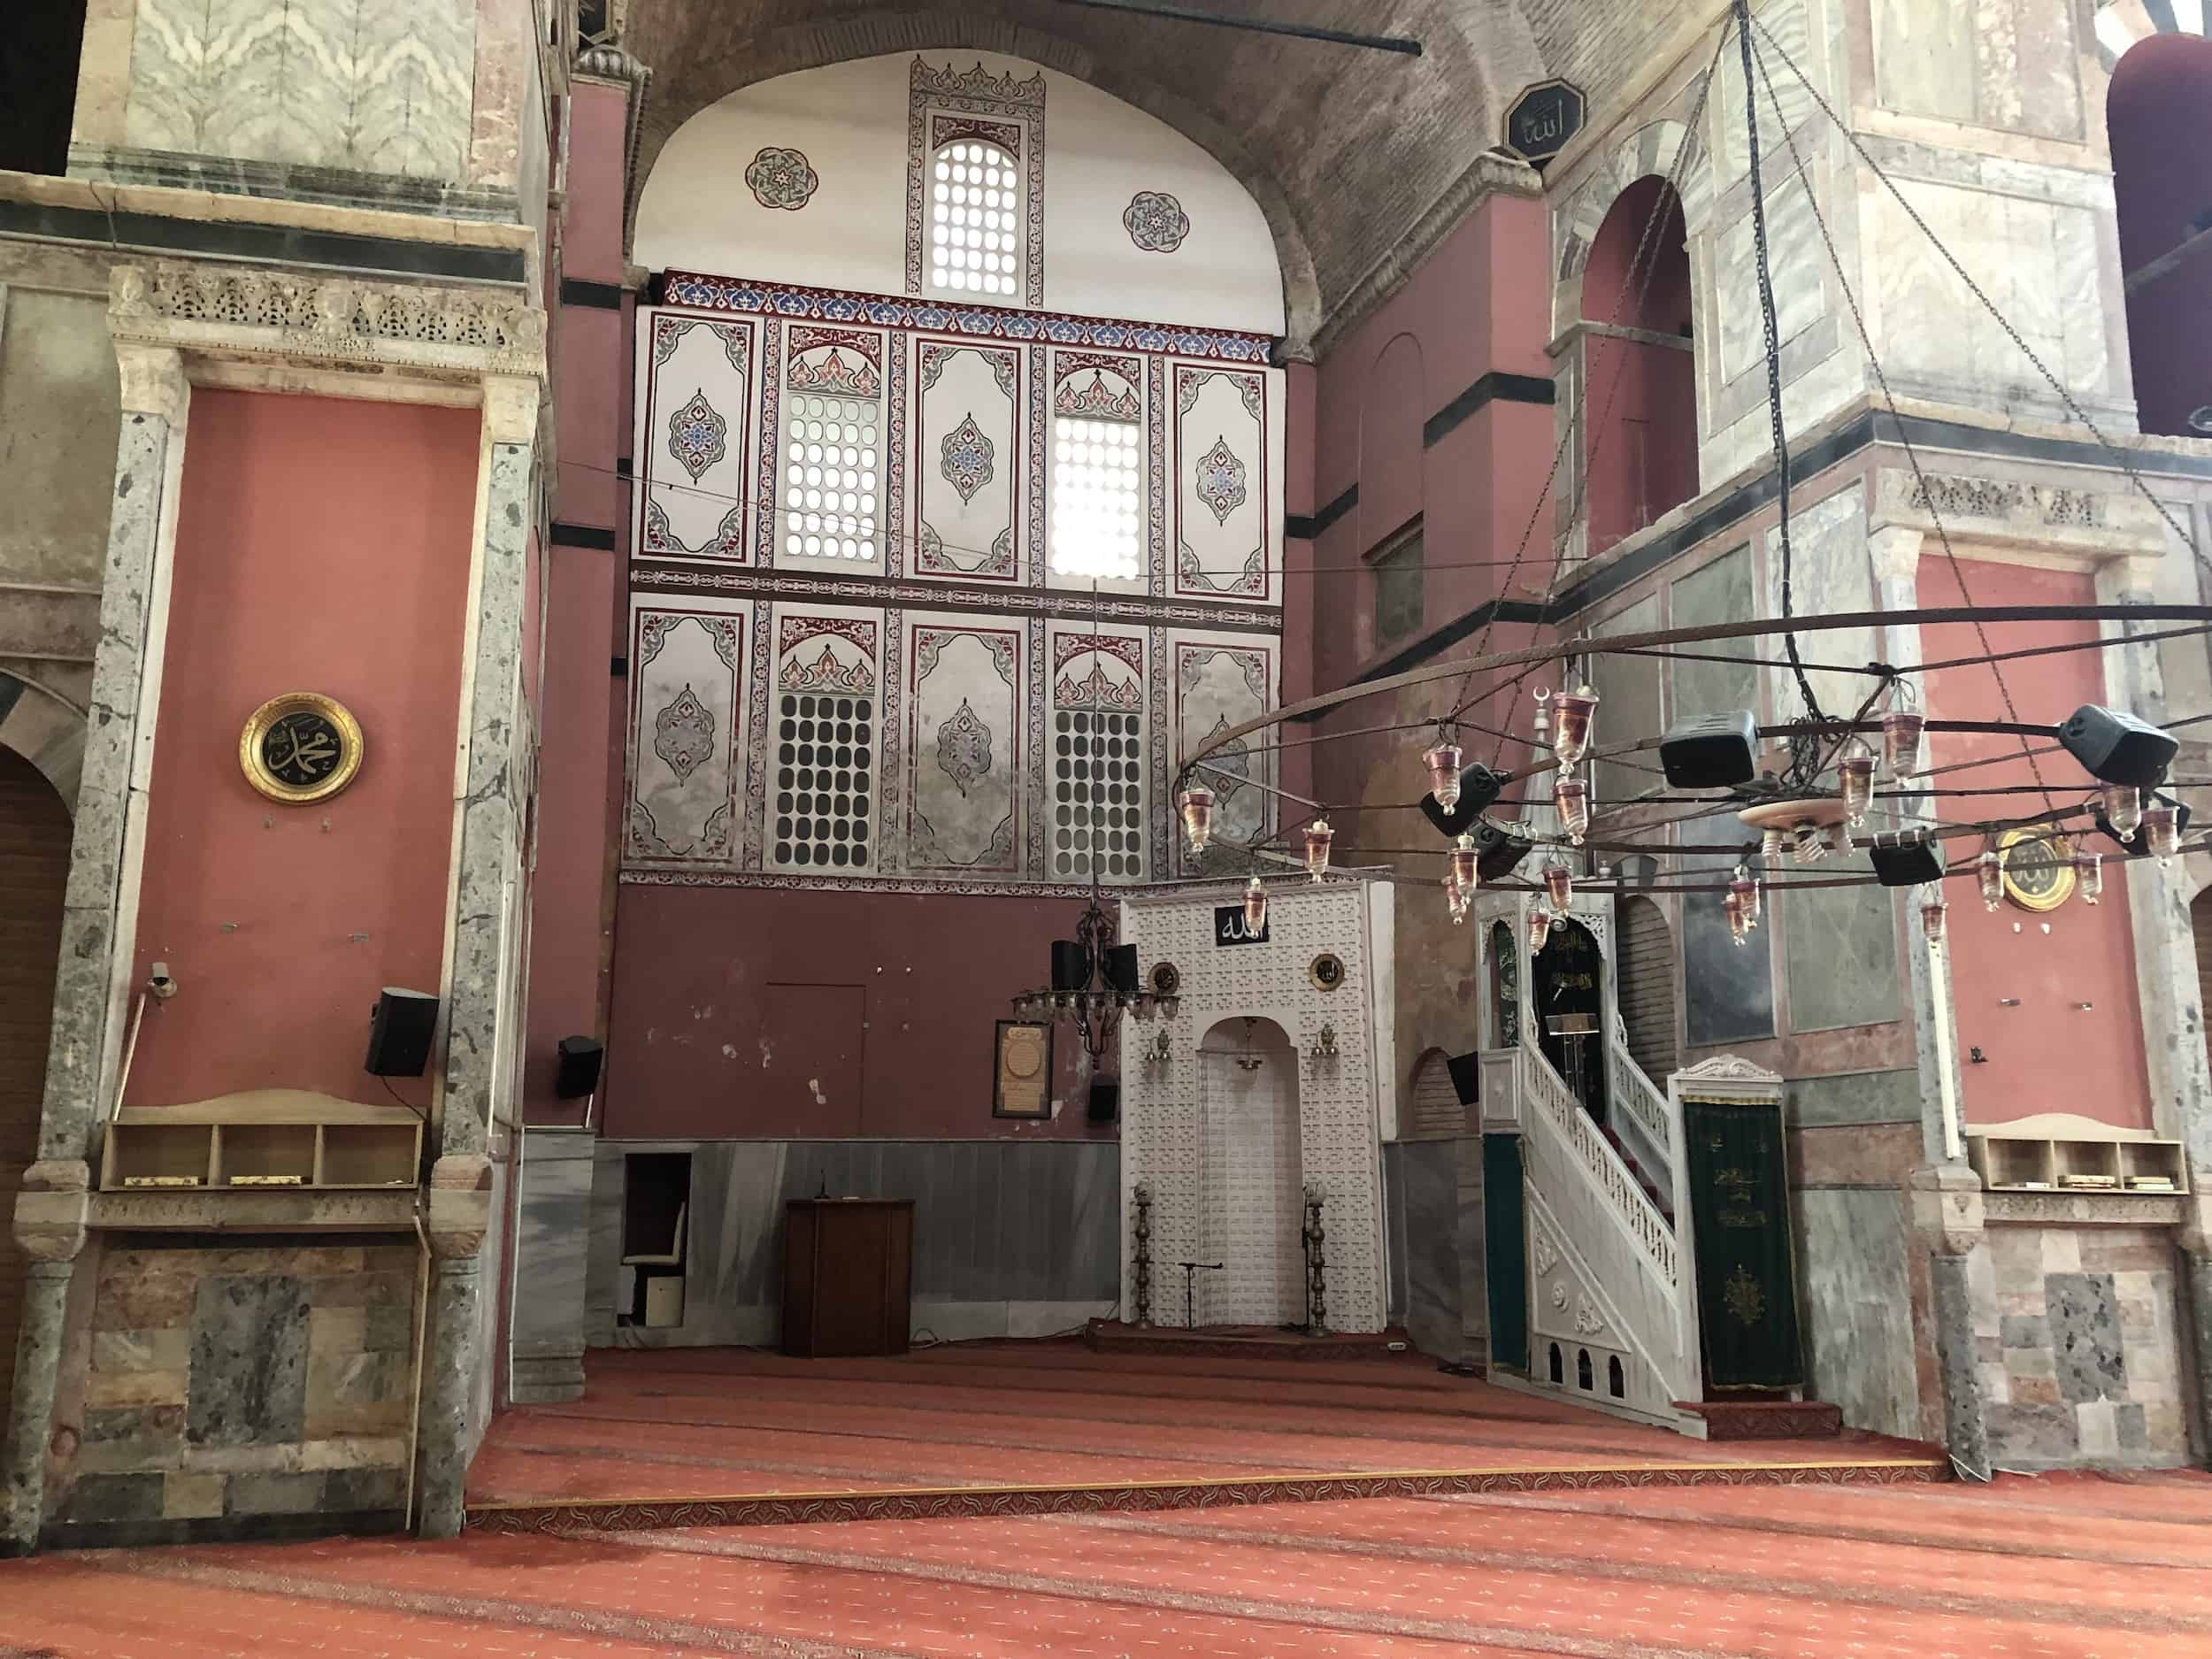 Prayer hall of the Kalenderhane Mosque